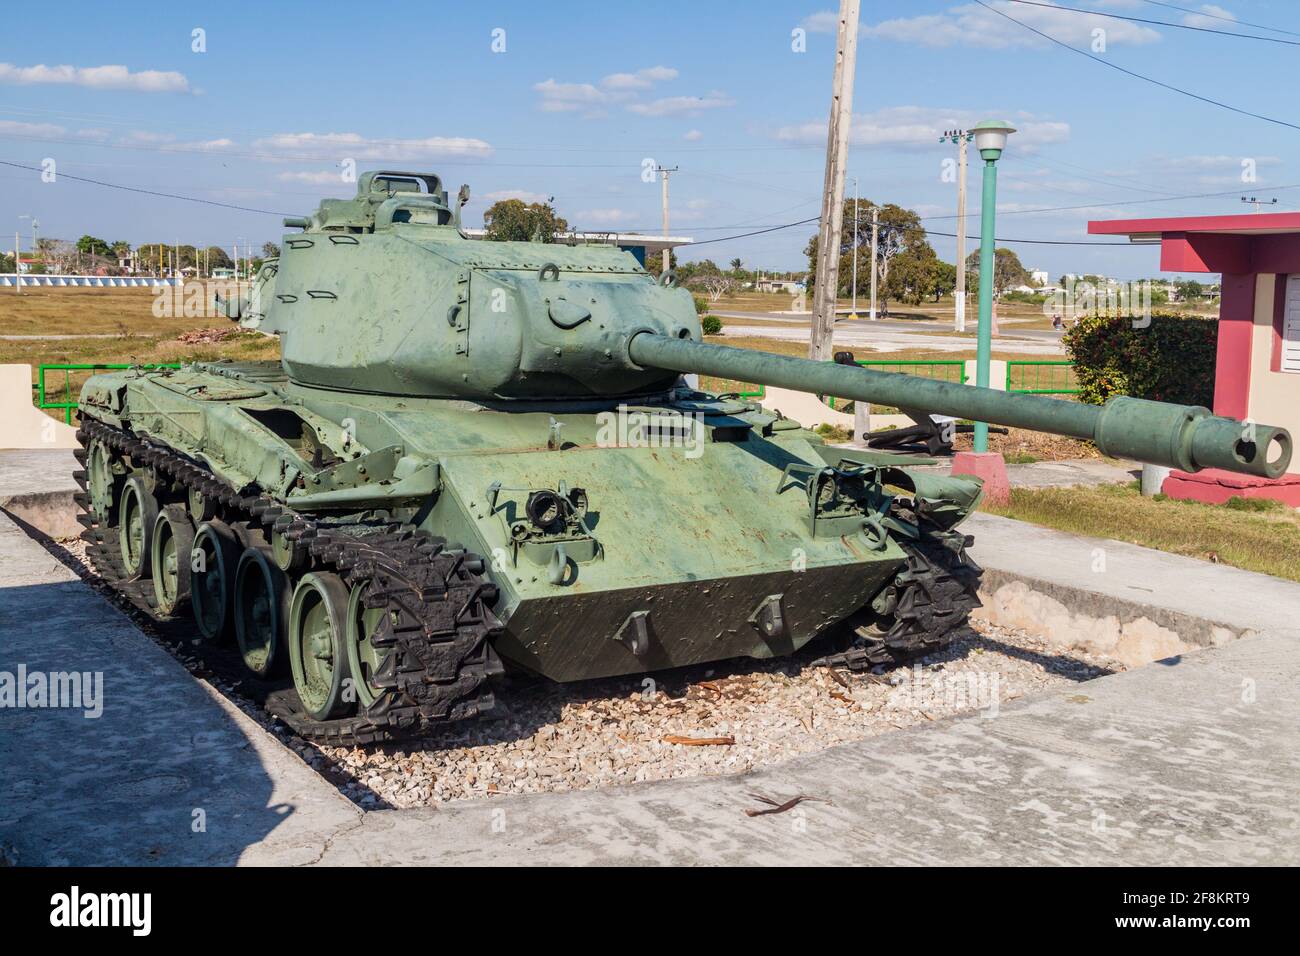 PLAYA GIRON, CUBA - FEB 14, 2016: Tank in a rmuseum dedicated to the failed 1961 Bay of Pigs invasion in Playa Giron village, Cuba. Stock Photo